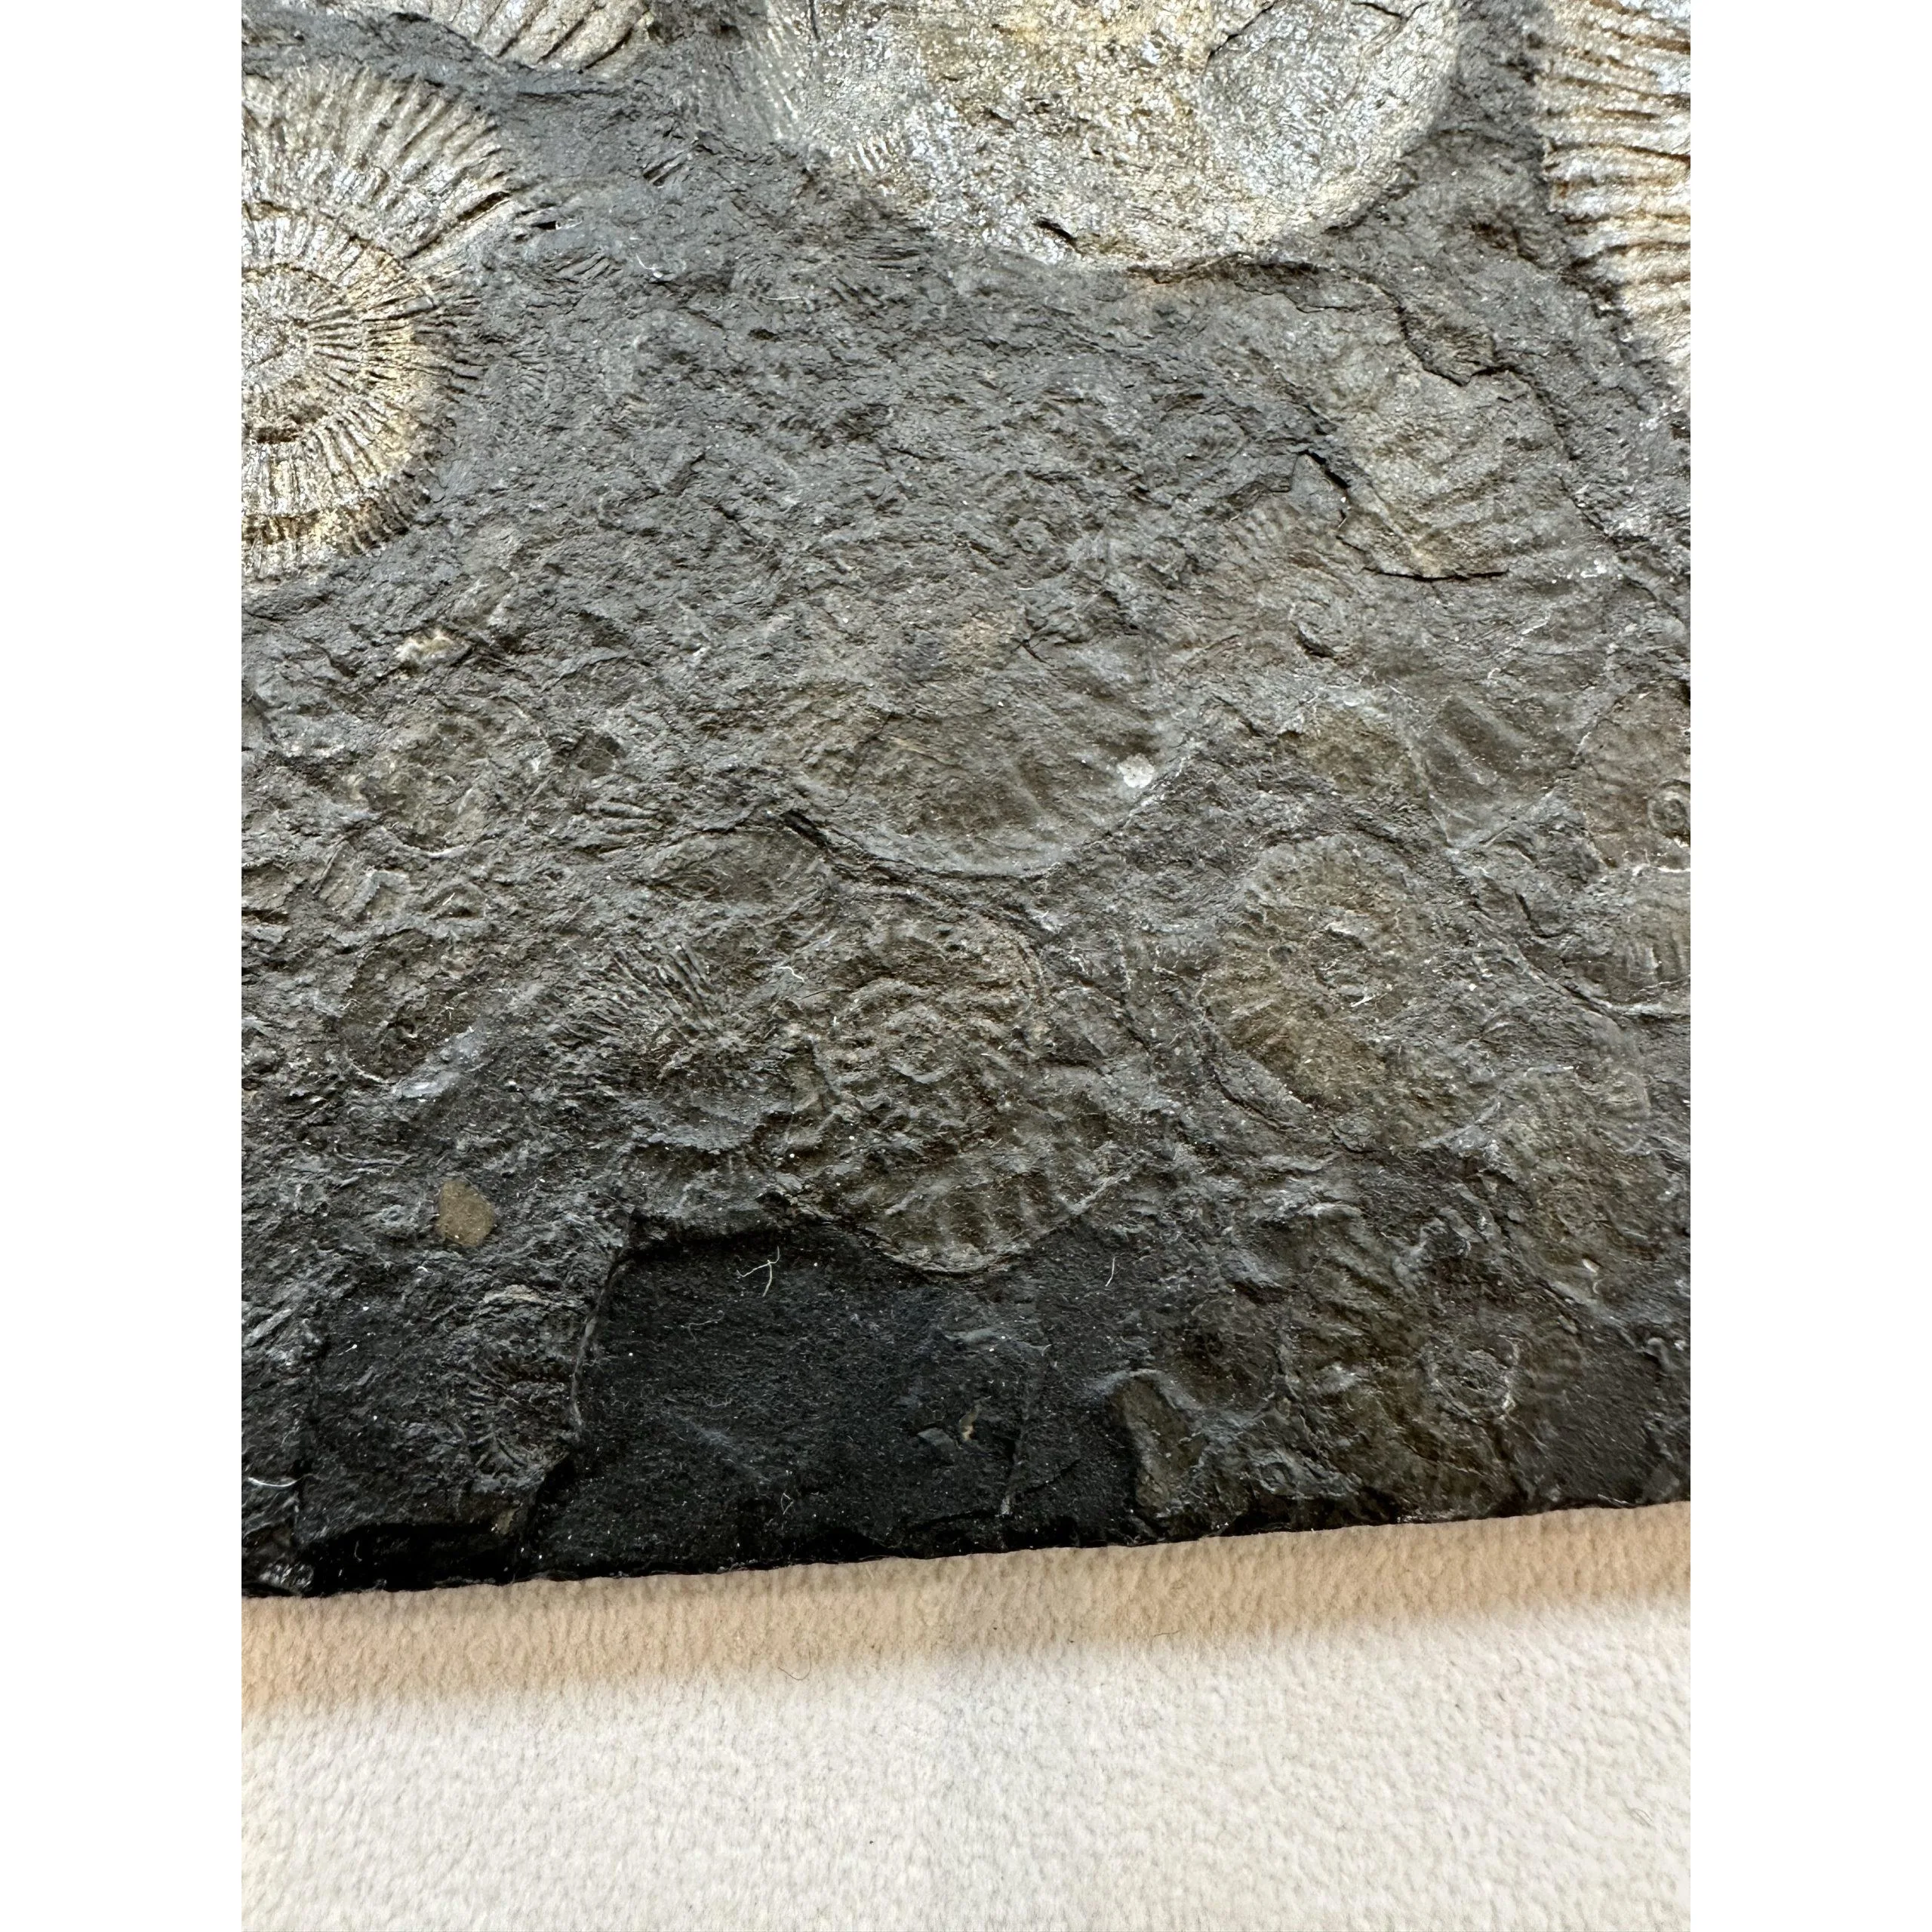 Ammonite Dactylioceras – Pyritized Prehistoric Online